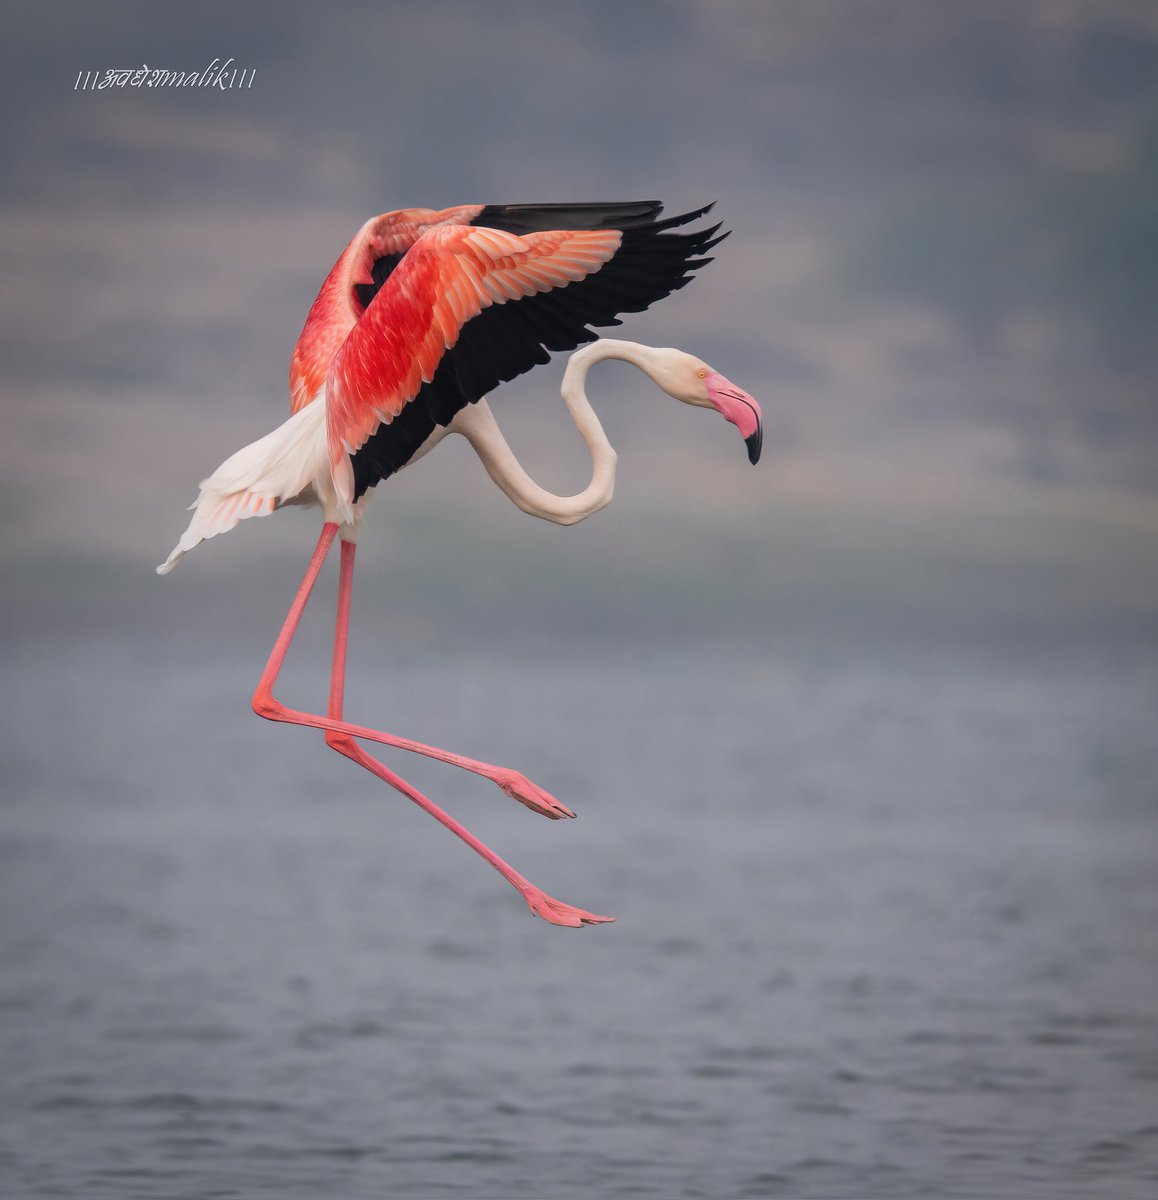 'Landing gear deployed'..
Greater Flamingo ... 
.
.
....
.
.
.
.
...
@IndiAves
#BirdsOfTwitter
#birdwatching 
#birdphotography 
#indianphotography
#picturebook #picoftheday
#nature #lakers #Maharashtra
#naturelovers #wetlands
#birding #rivers #birdsofindia
#IndiWild #IndianBirds